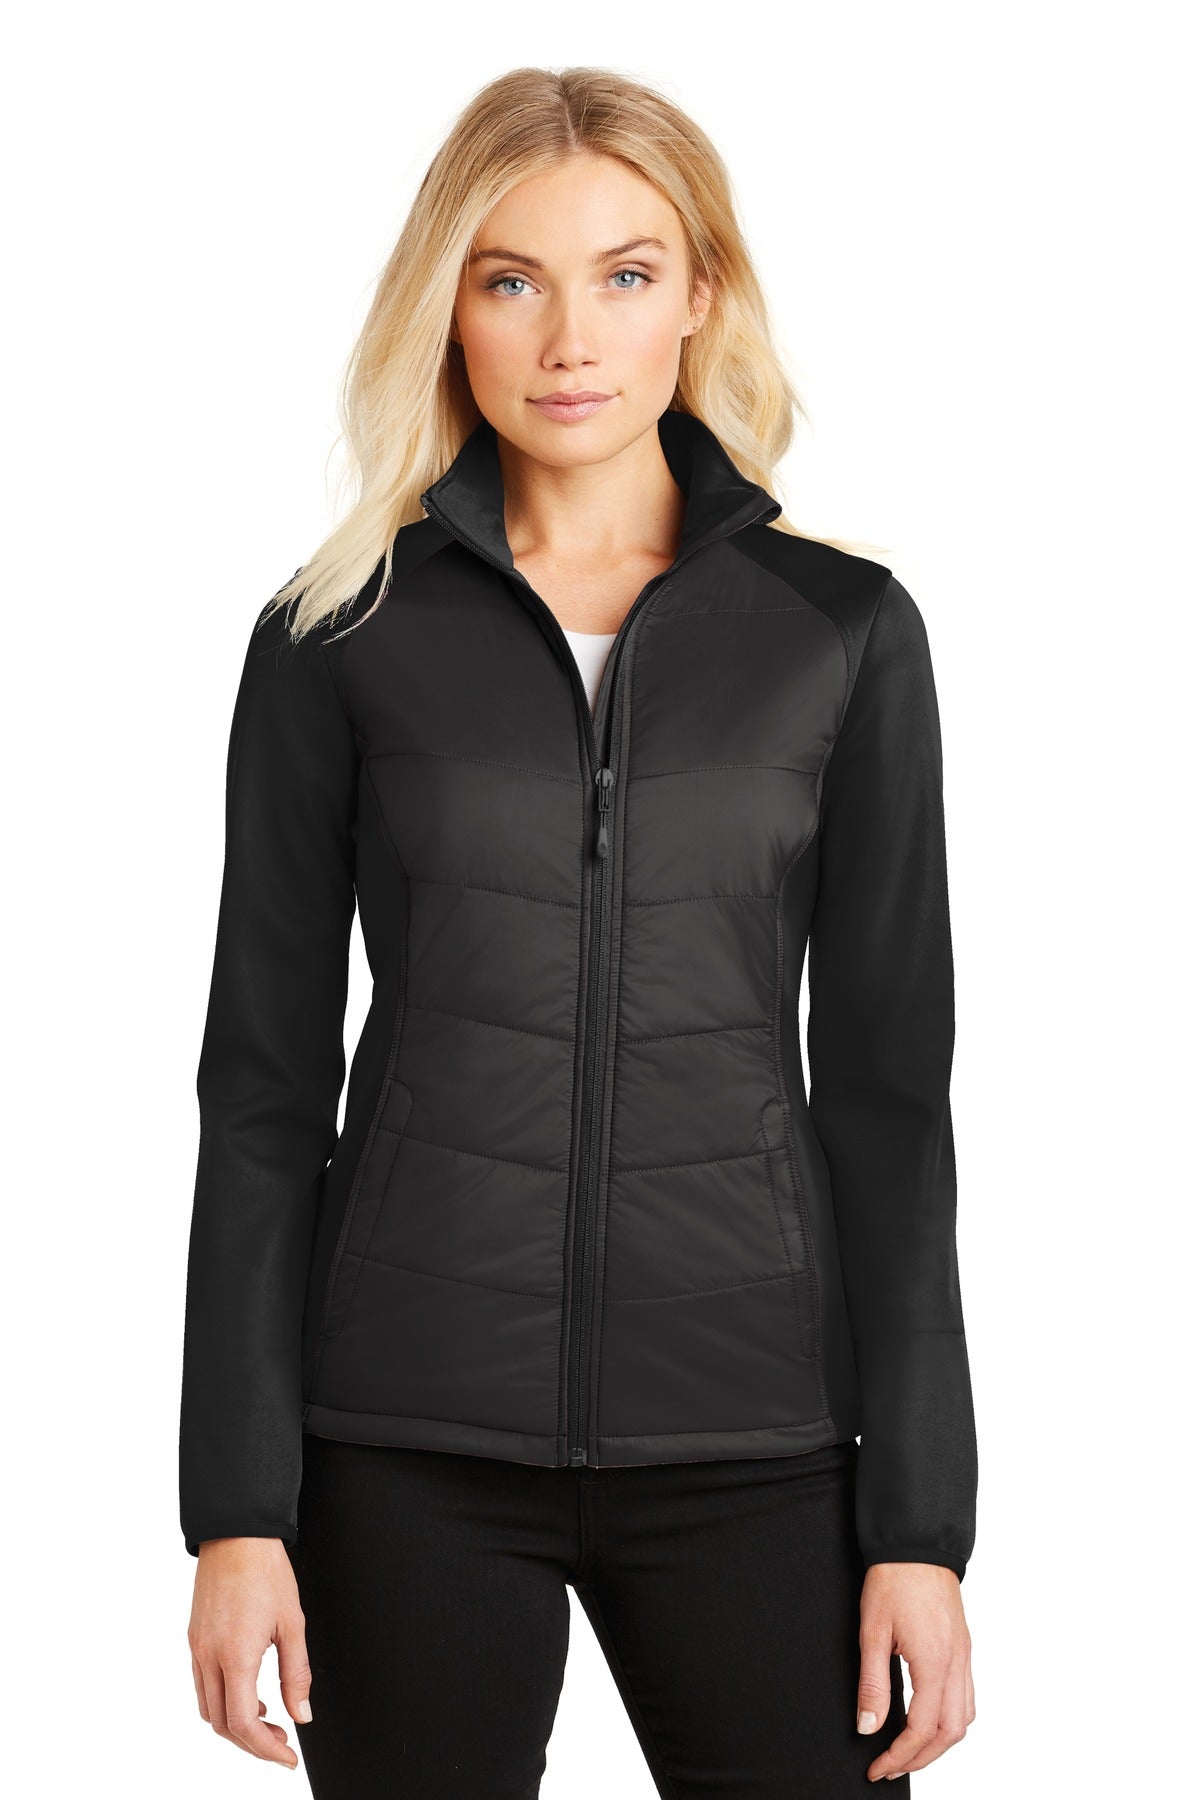 Port Authority® Ladies Hybrid Soft Shell Jacket. L787 - DFW Impression